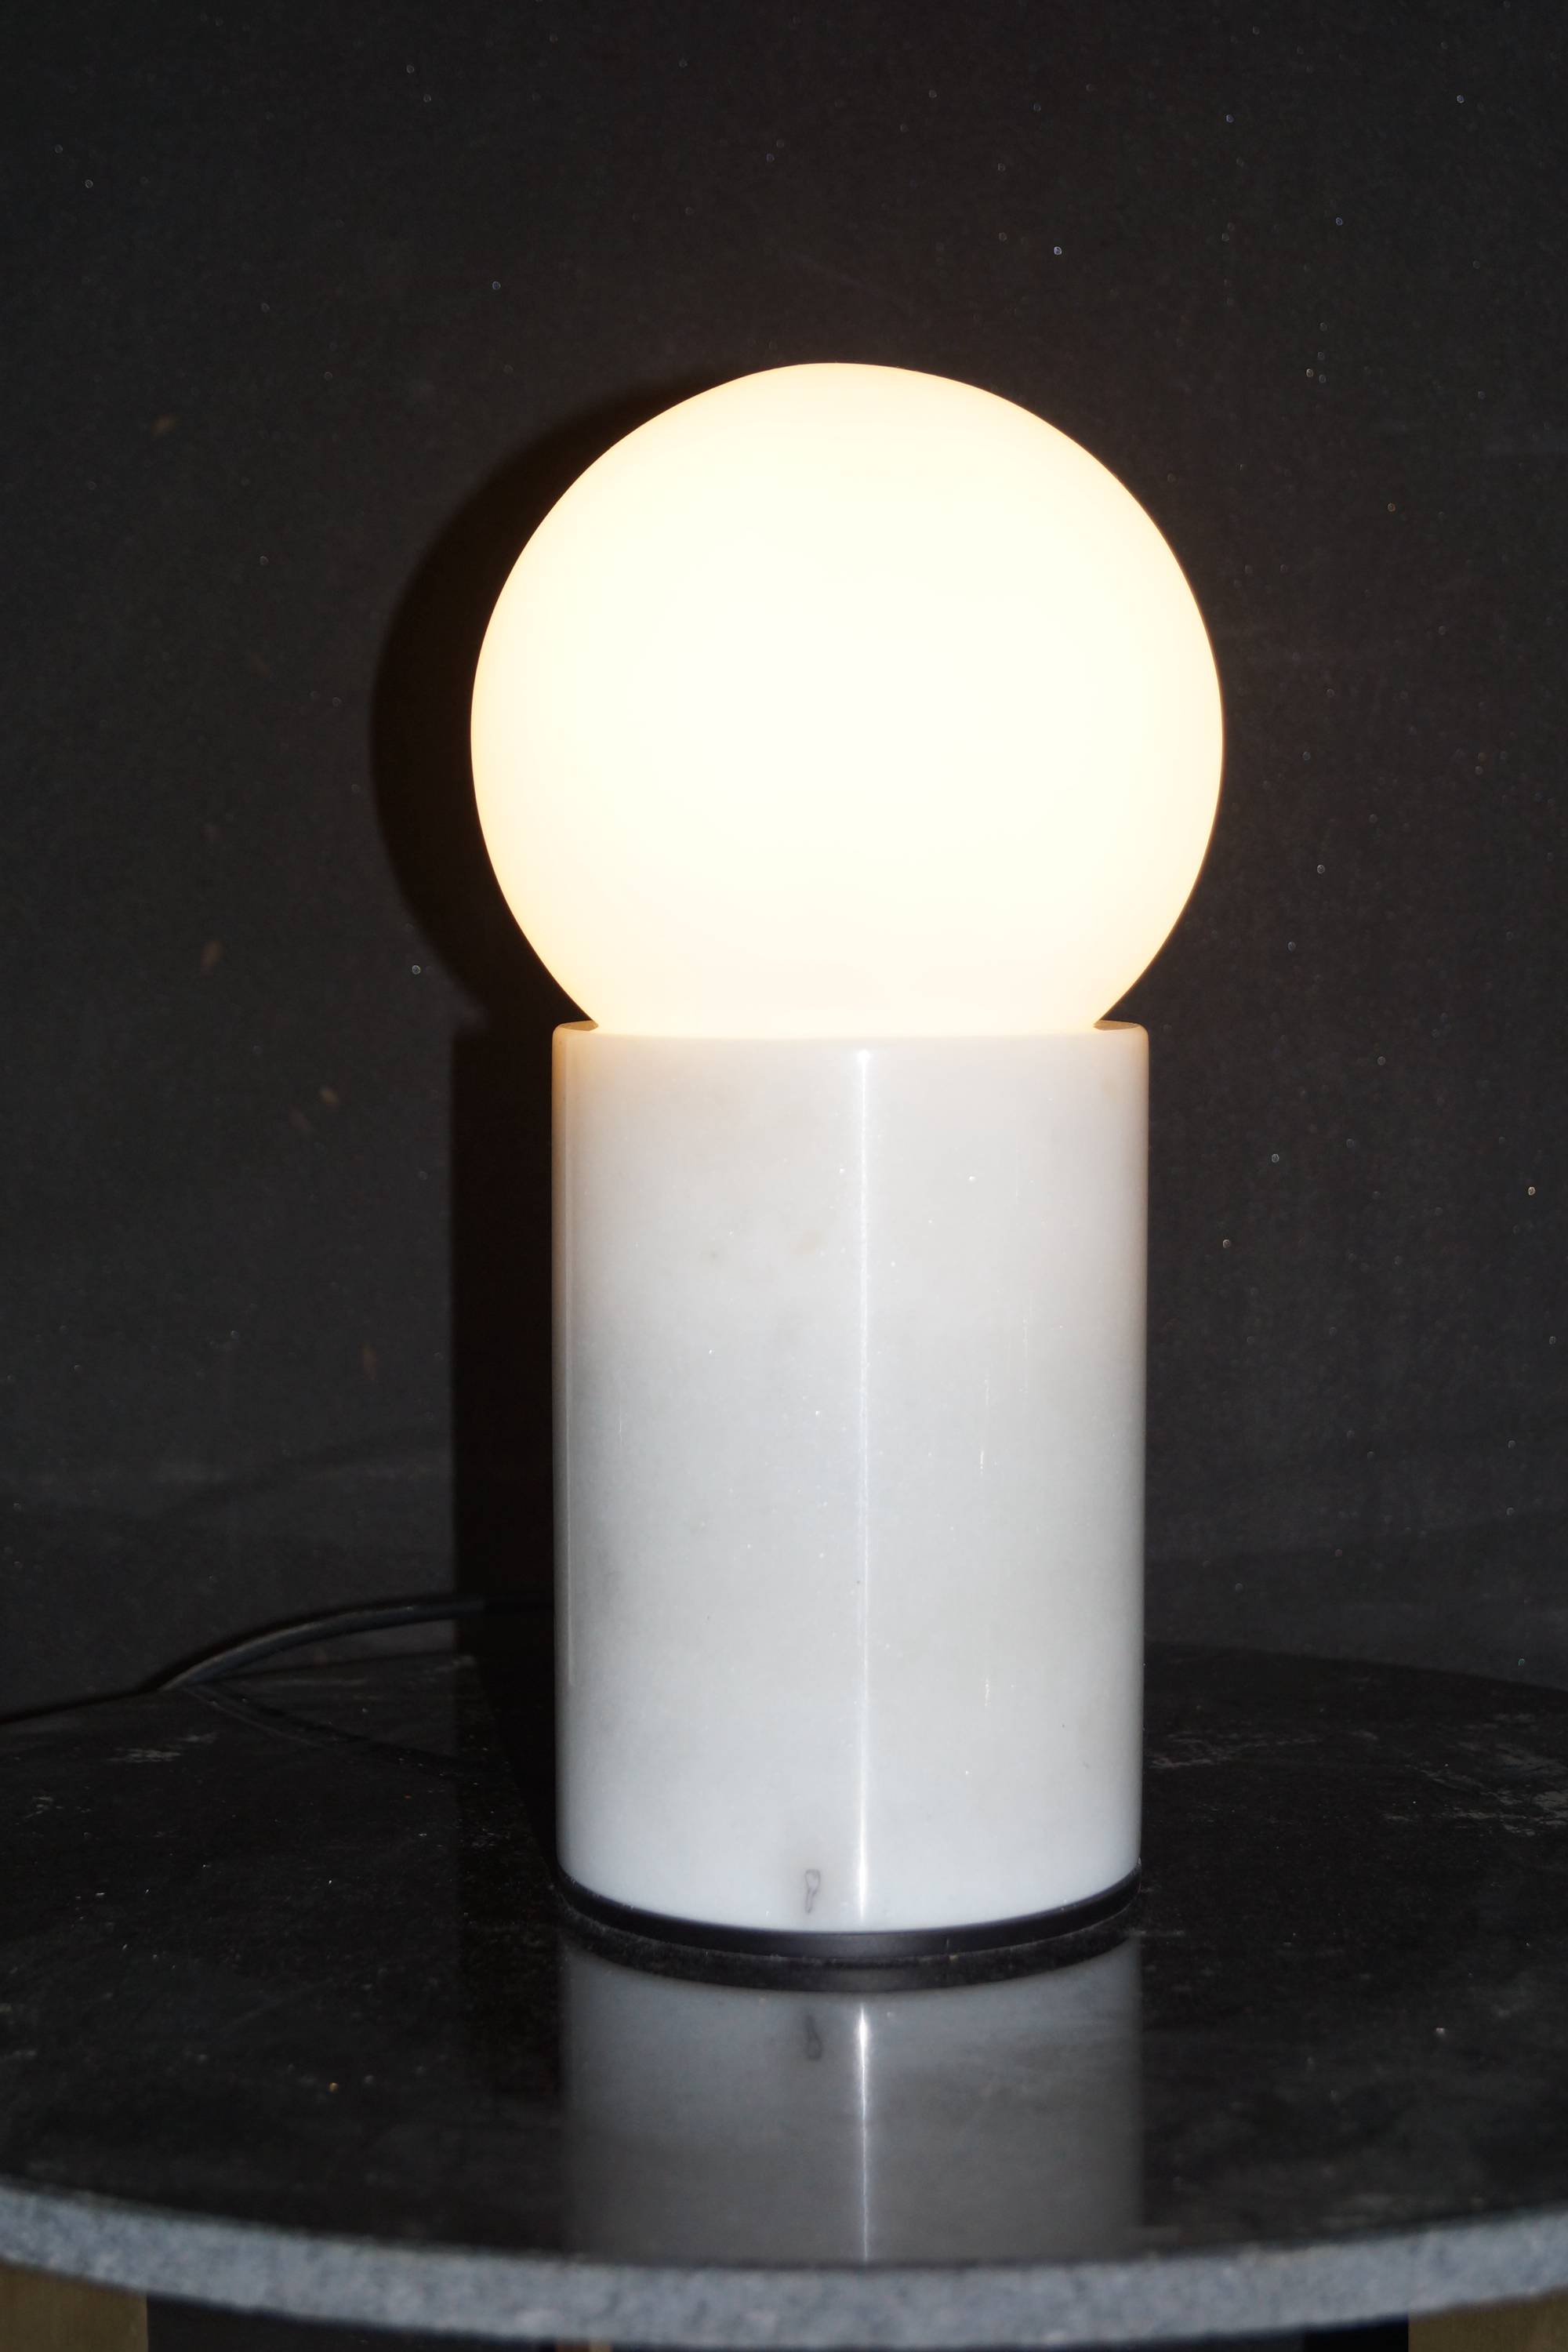 Modern marble glass bedside table light (KA-T17-088)